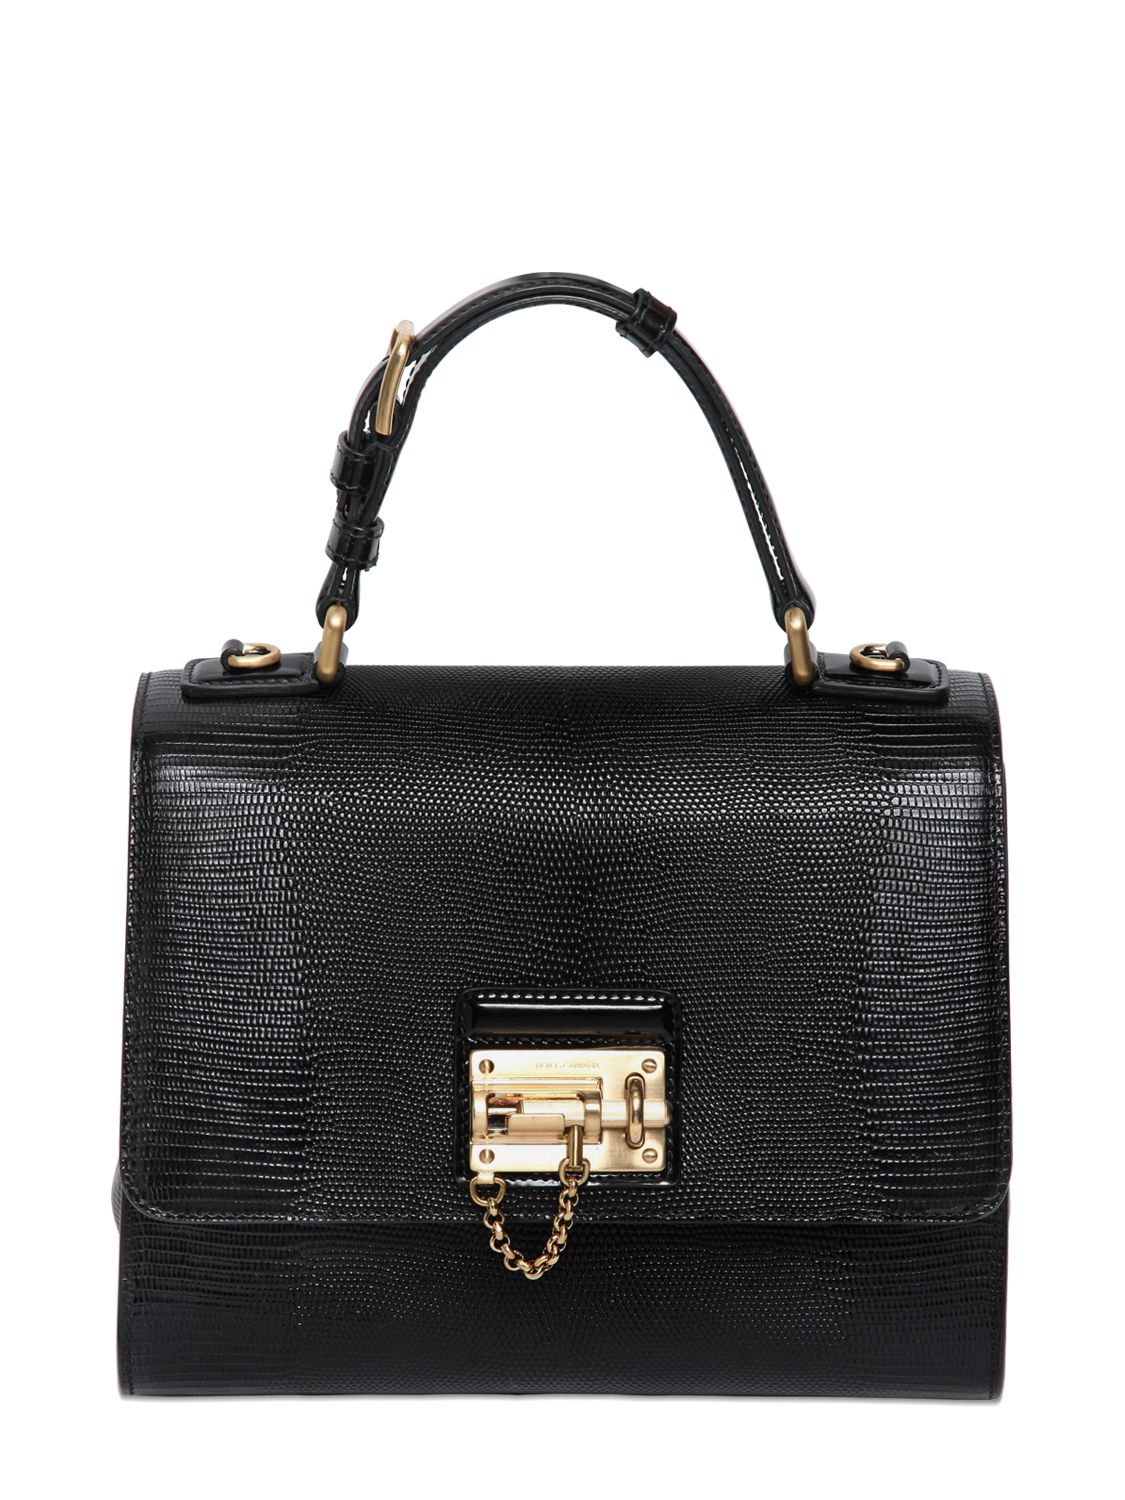 Lyst - Dolce & Gabbana Monica Iguana Embossed Leather Bag in Black